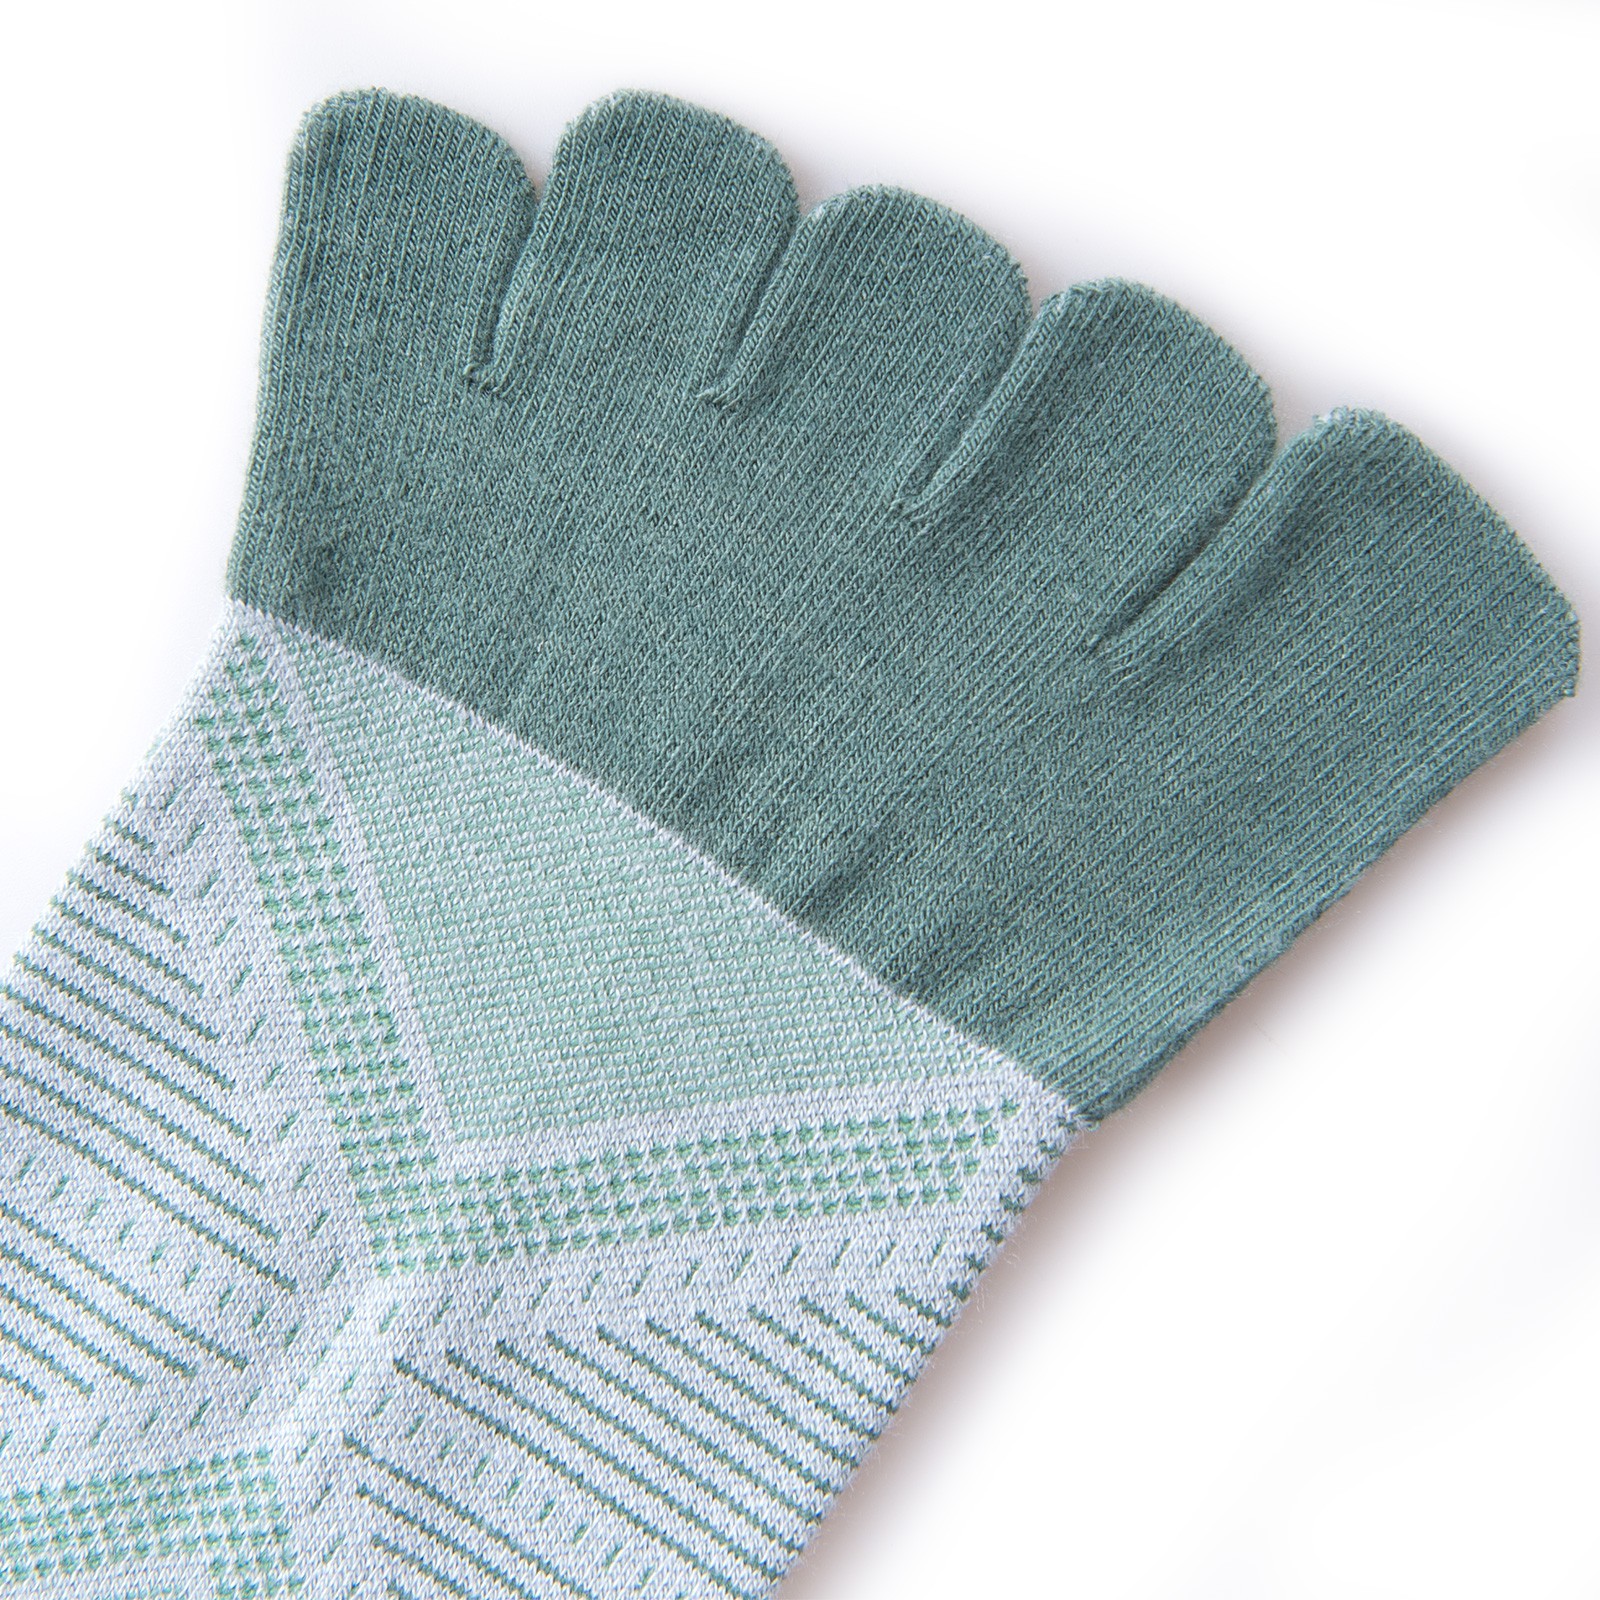 AONIJIE E4825 Running Coolmax Athletic Toe Socks 1 Pair Breathable Wear-resistant Sports Outdoor Hiking Walking Fve-finger Socks